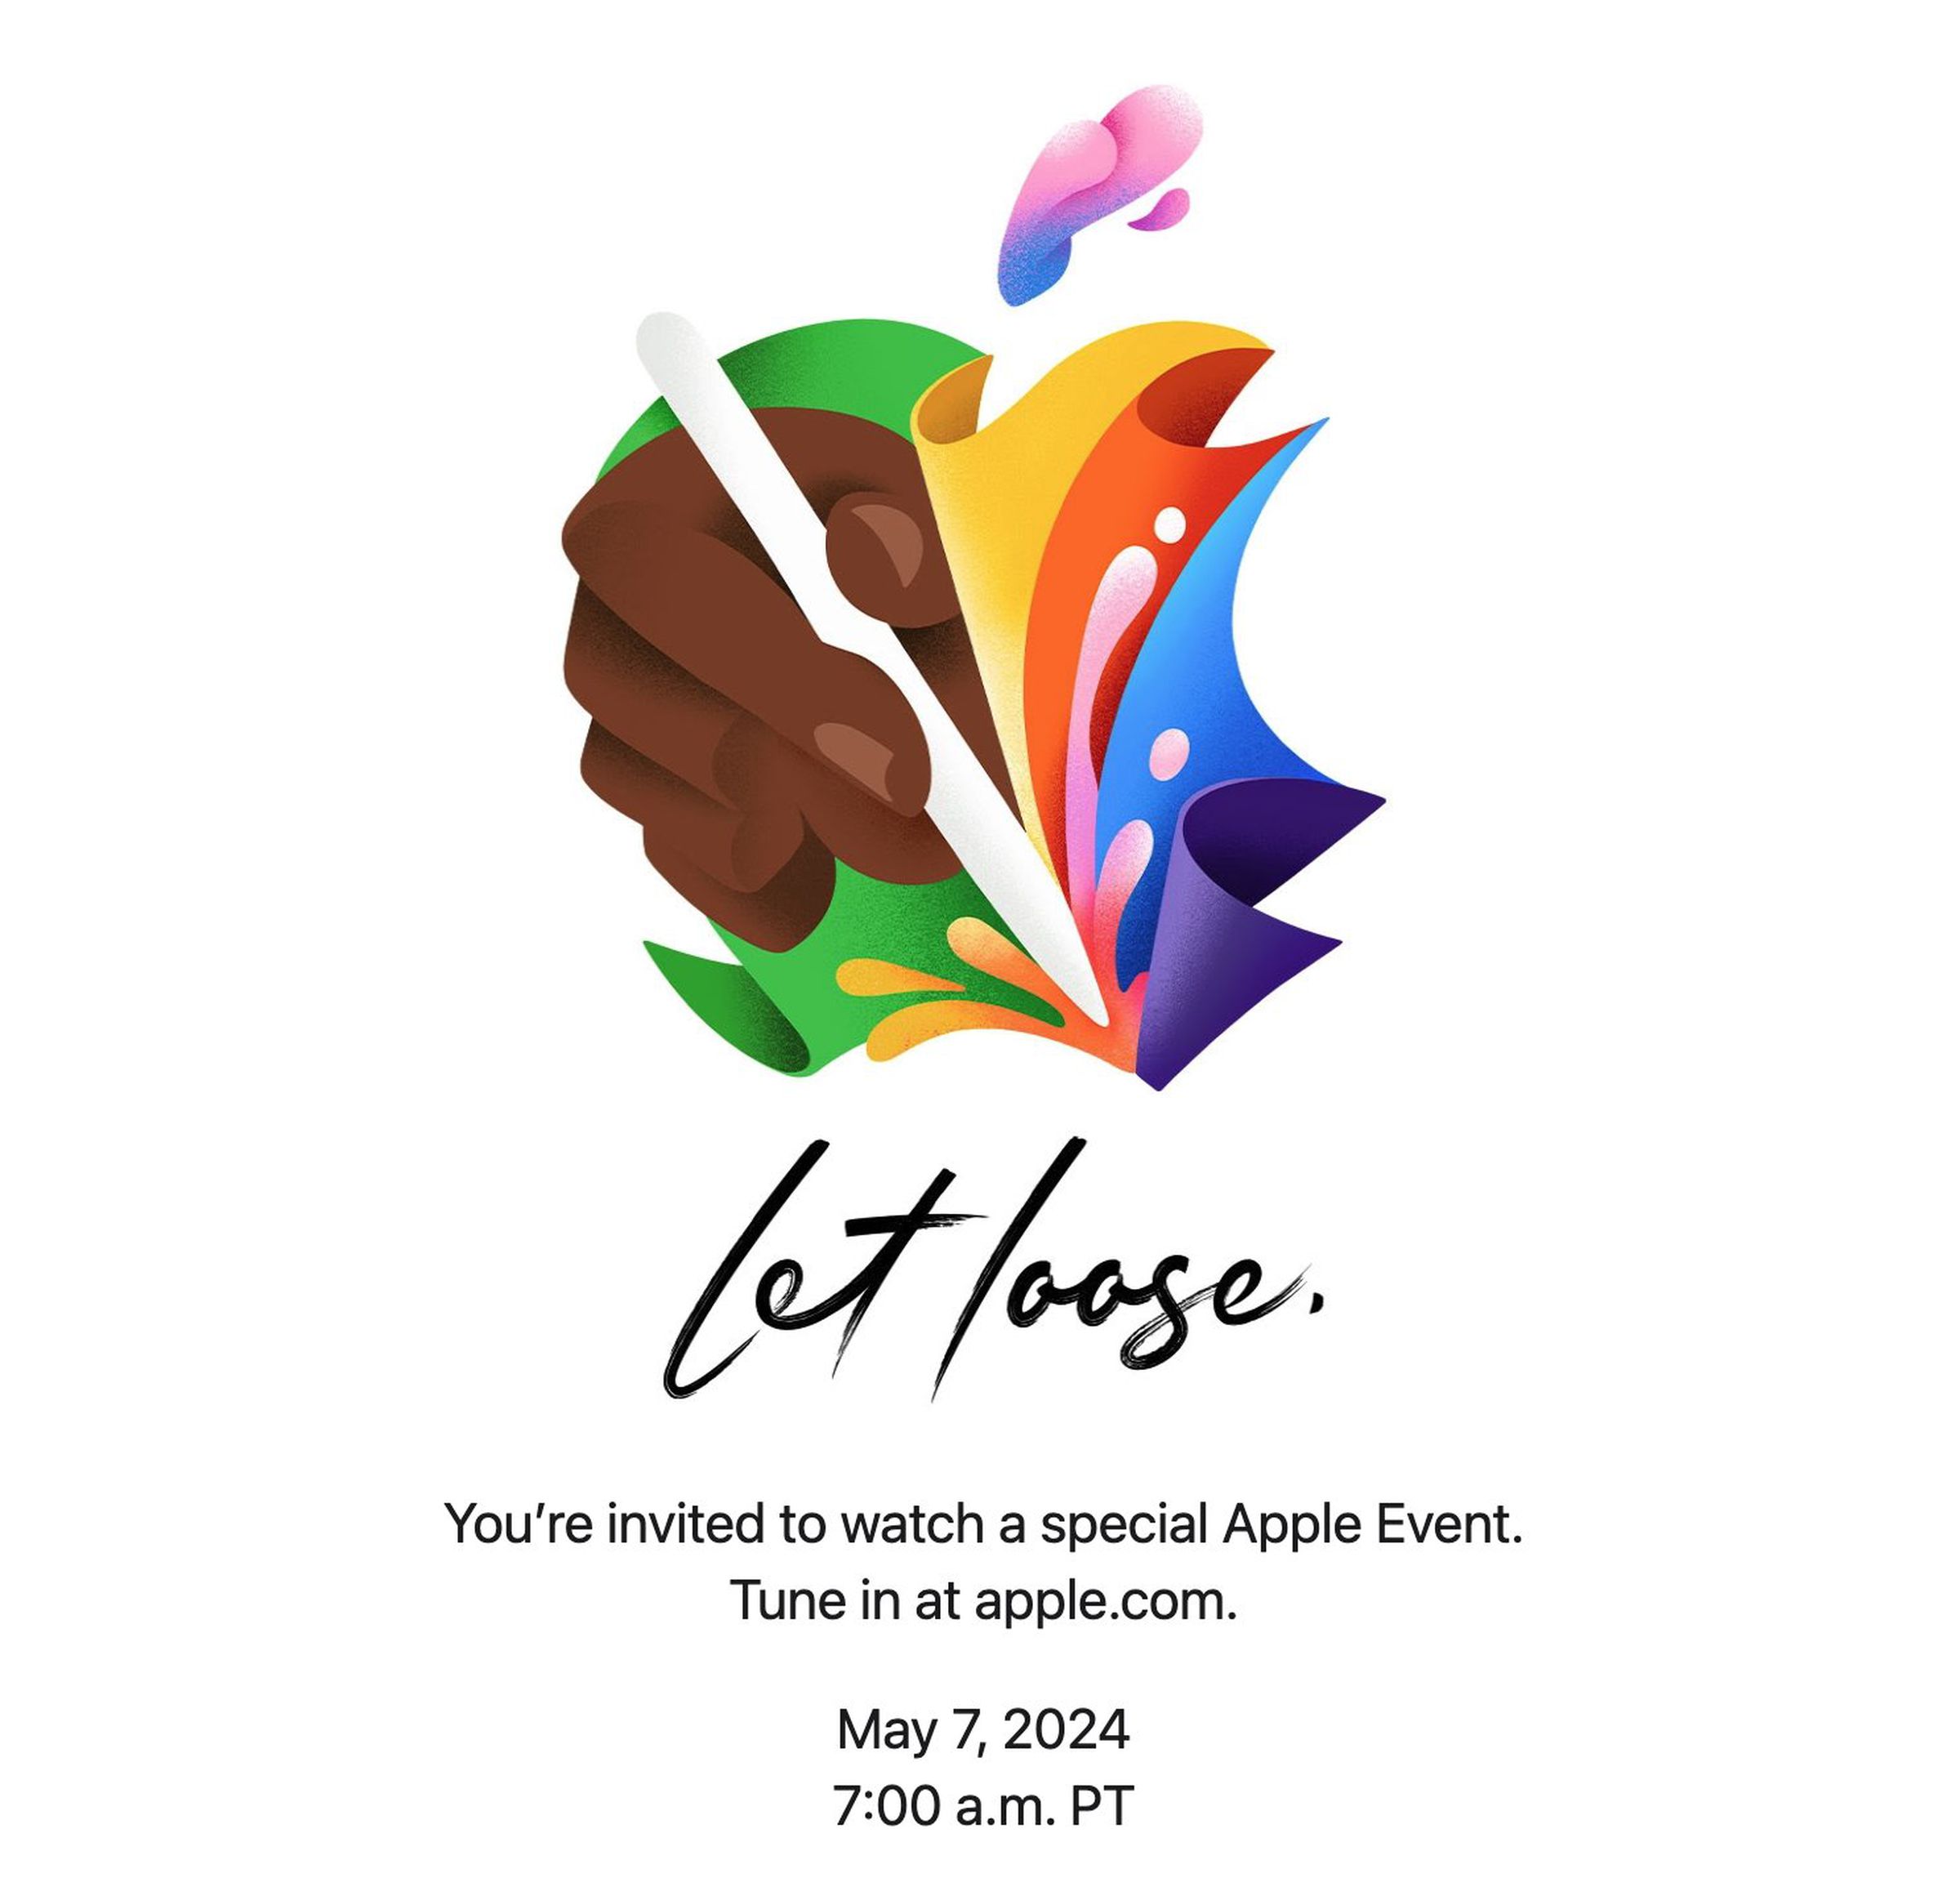 Apple’s event invite.